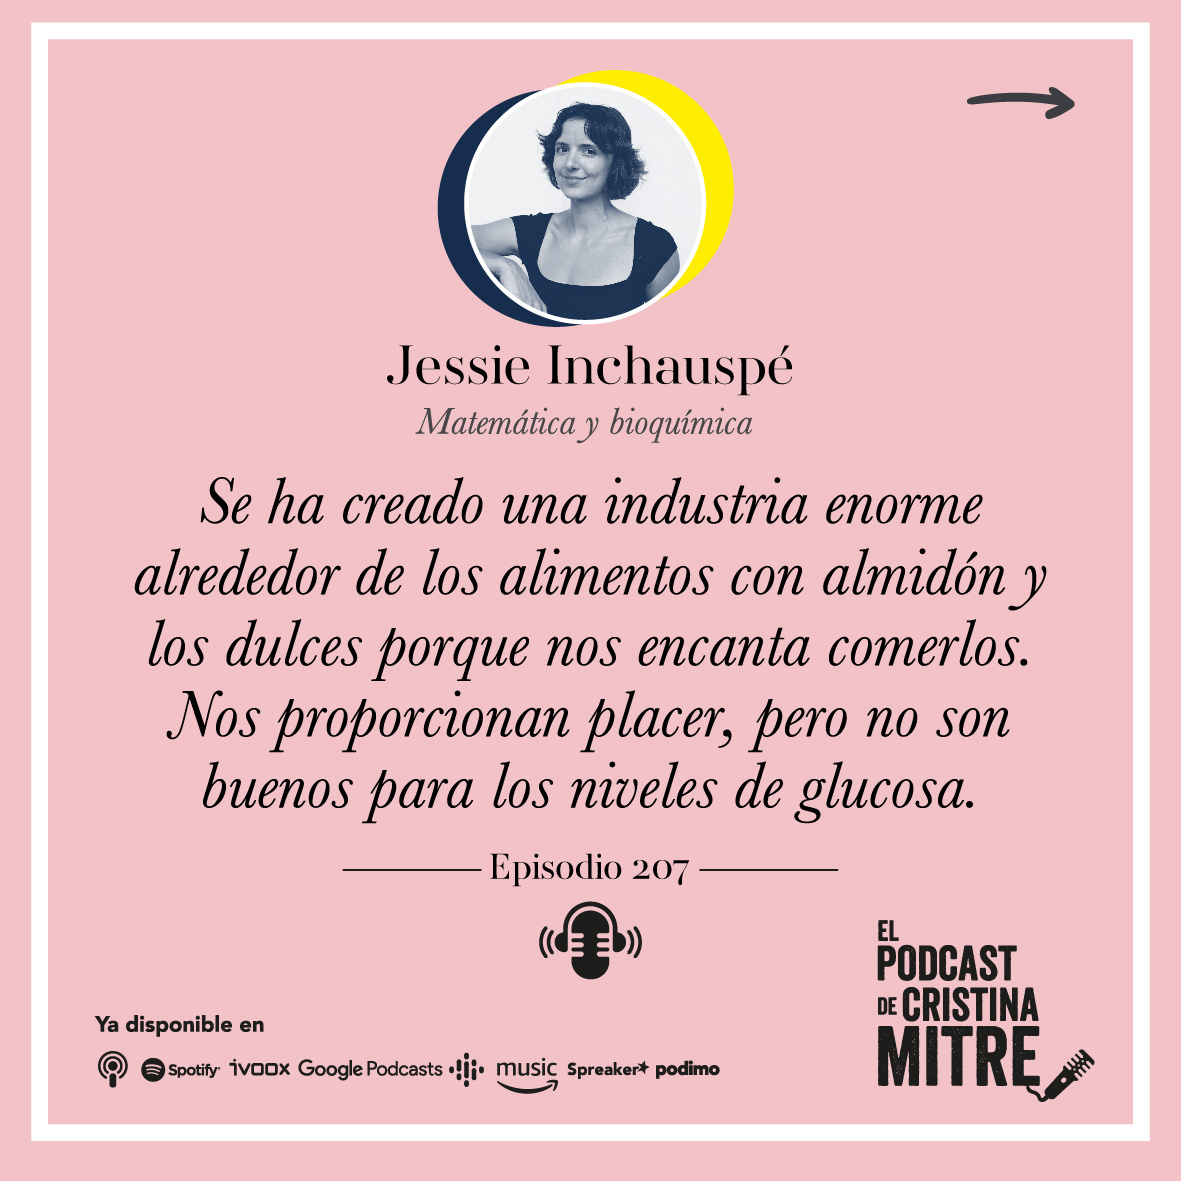 El podcast de Cristina Mitre Jessie Inchauspe insulina